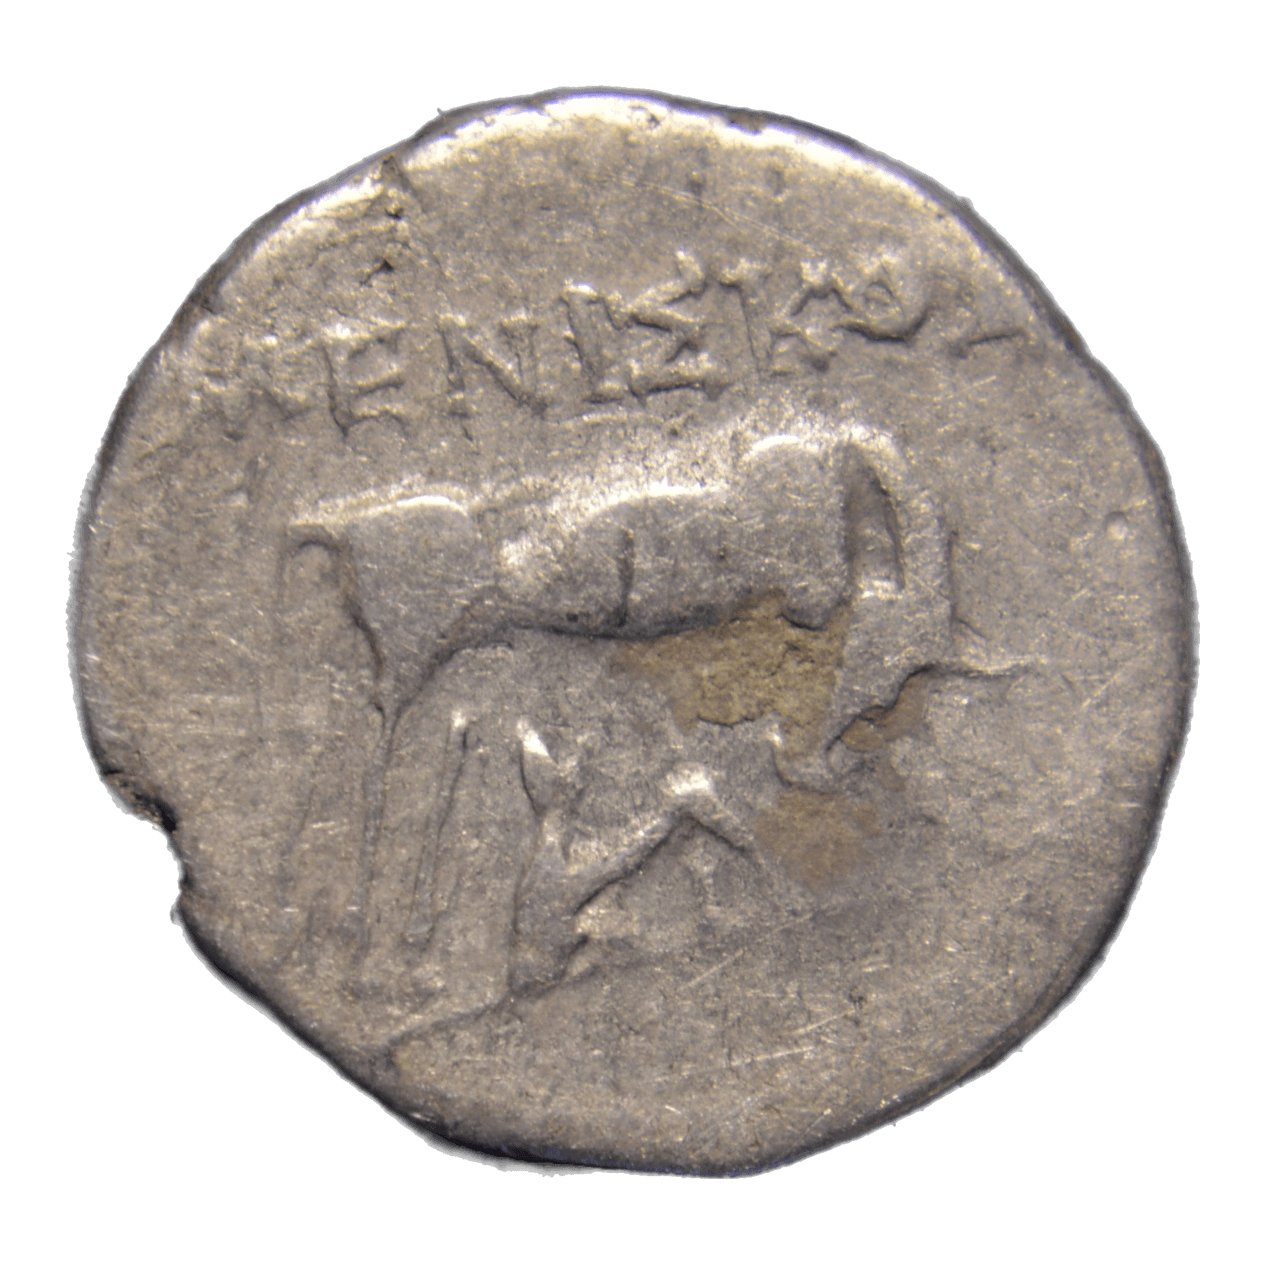 Silver Greek Seleucid Drachma - Found in Israel